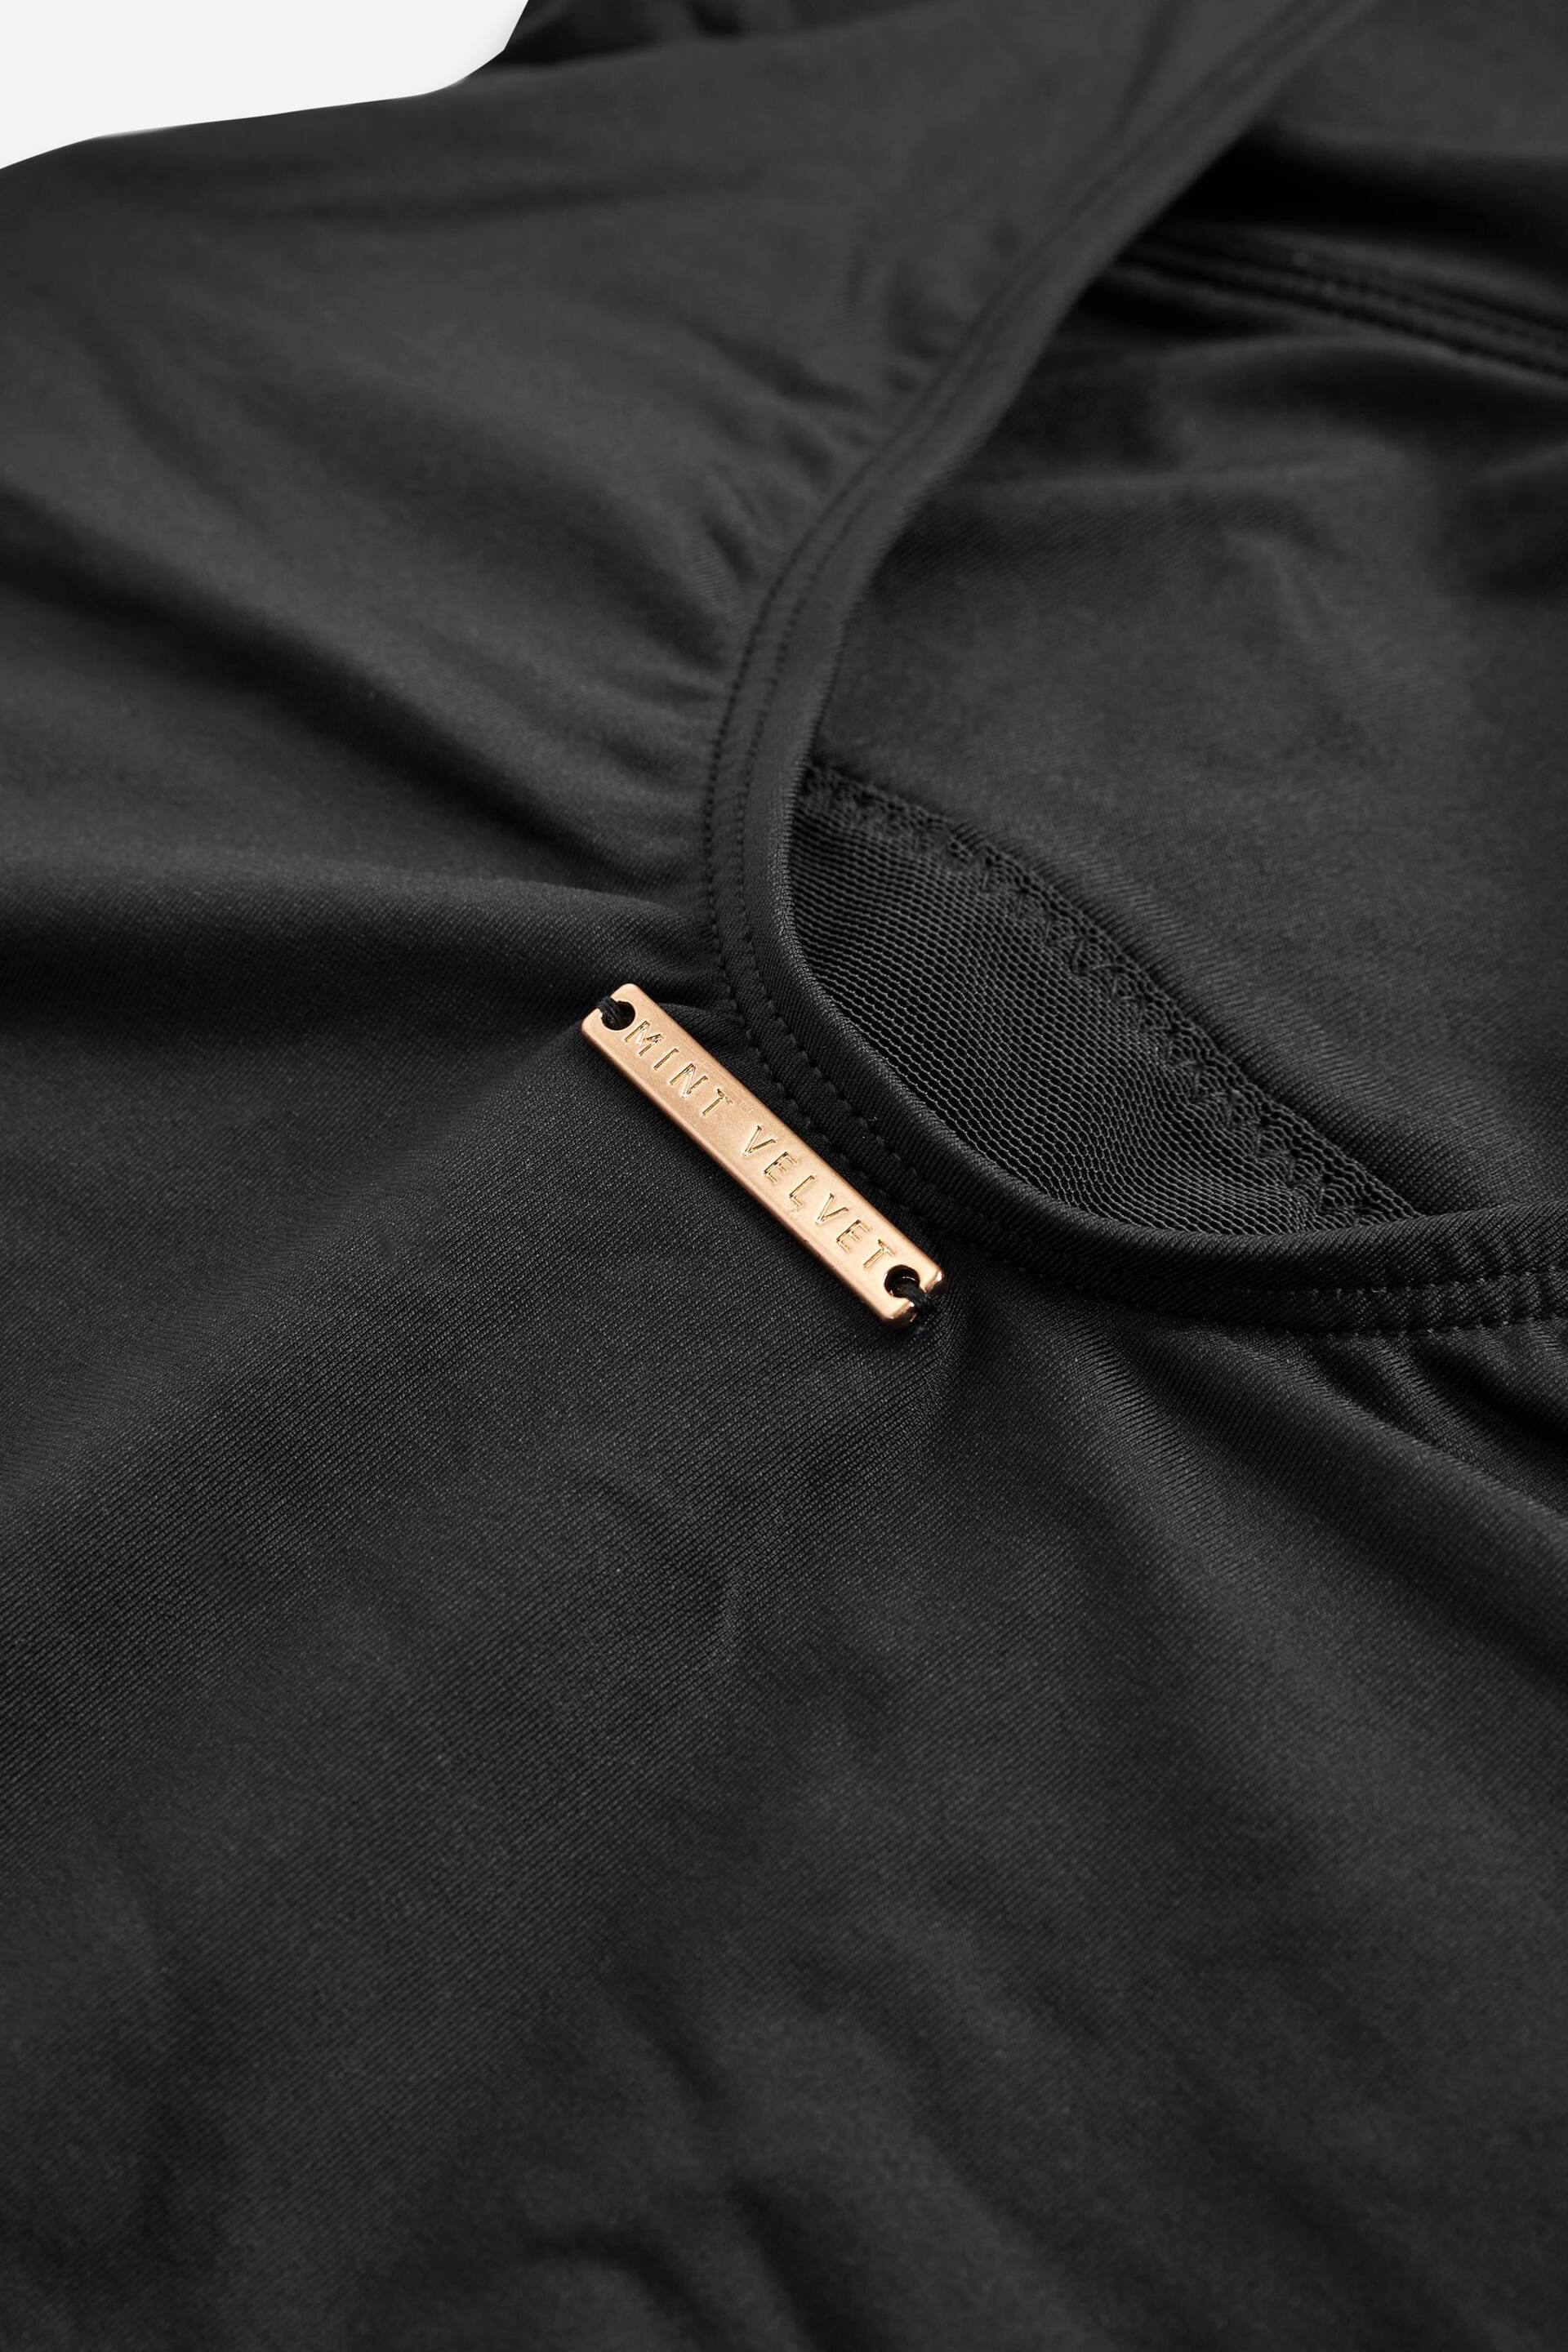 Mint Velvet Black Tummy Control Plunge Swimsuit - Image 6 of 6